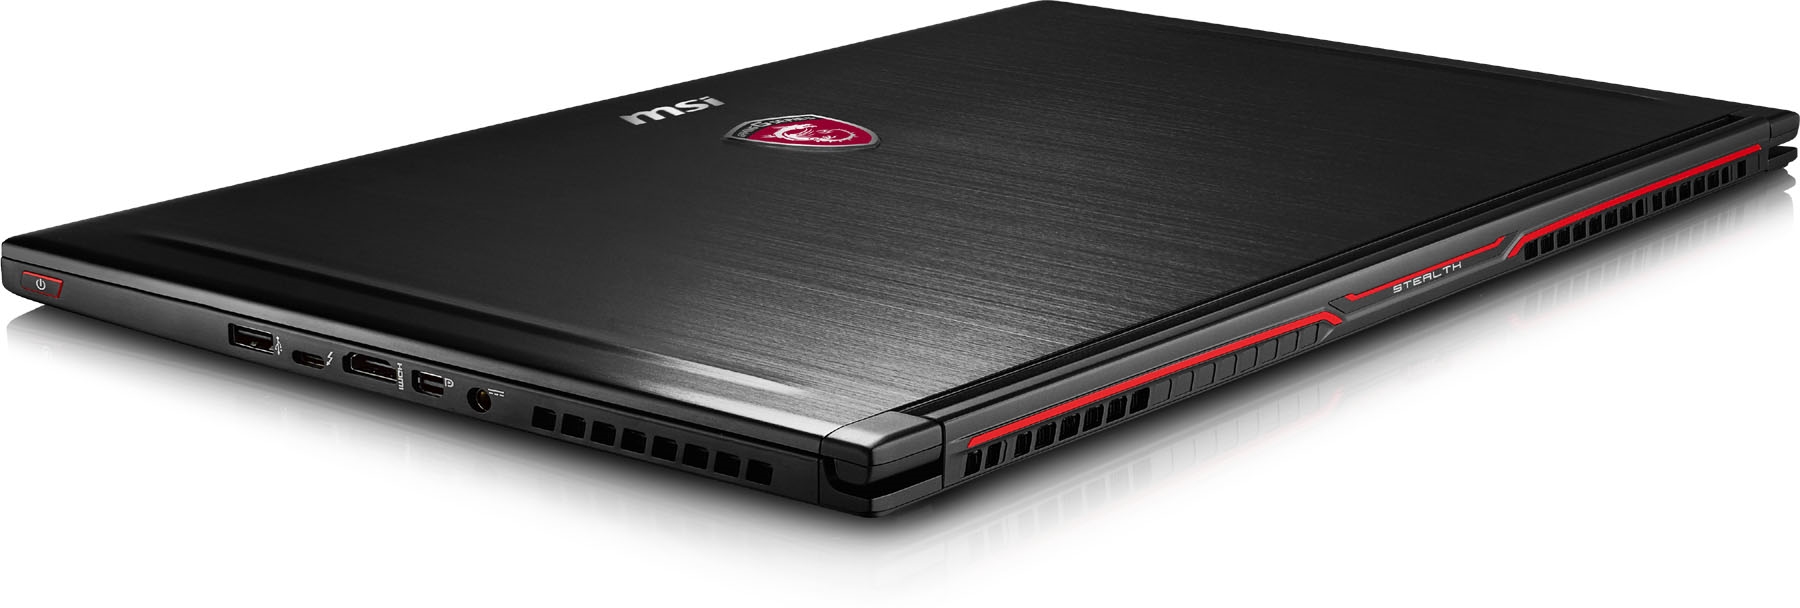 Laptop MSI GS63VR 7RG Stealth Pro GTX1070 8GB-6.jpg